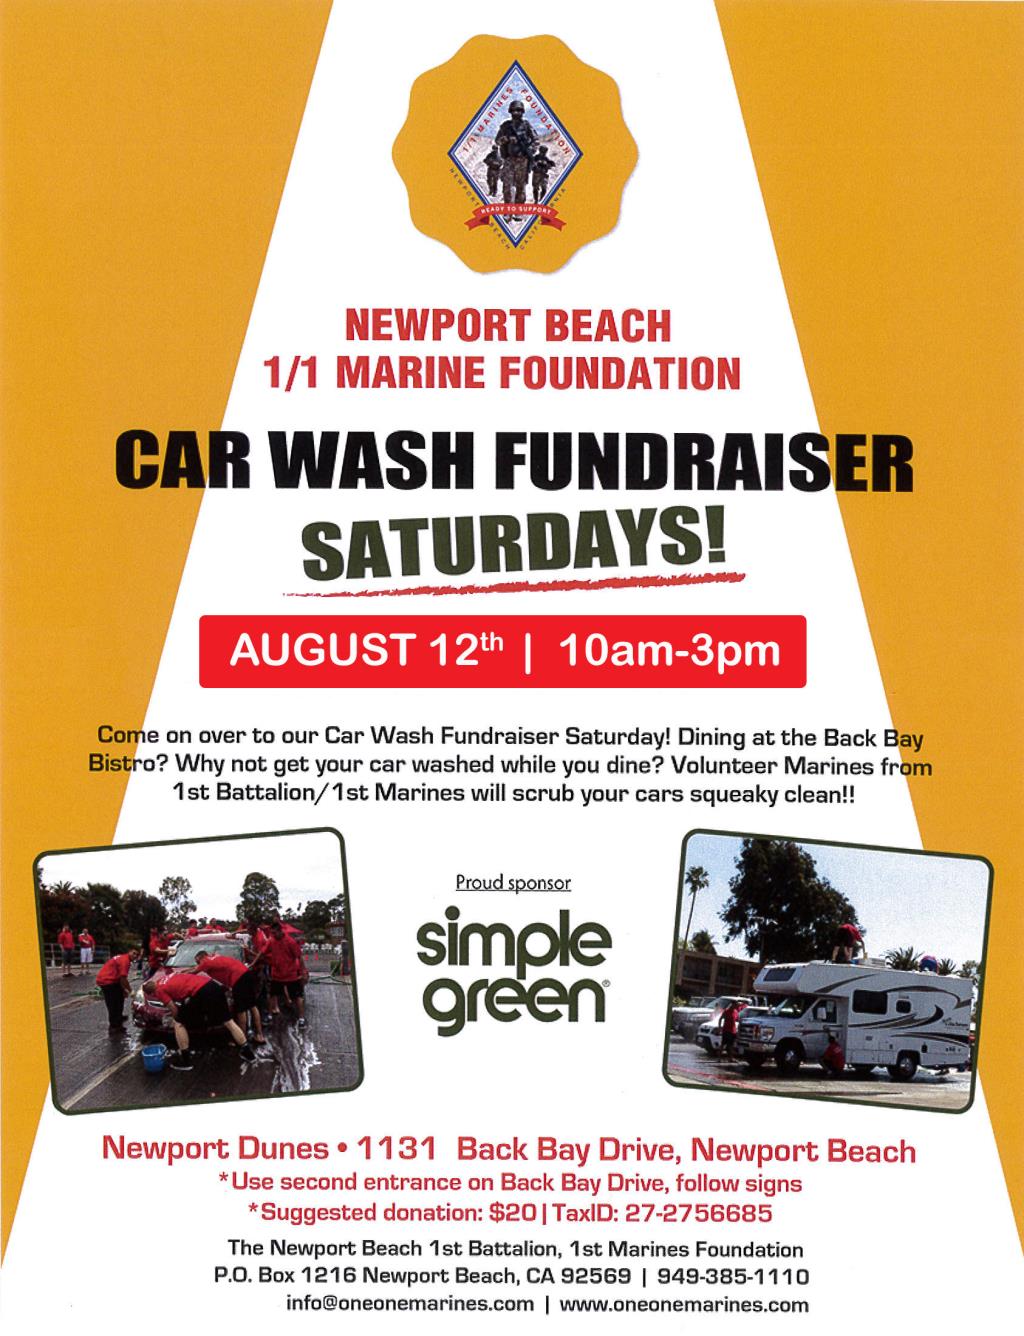 2017 Car Wash Fundraiser 1-1 Marine